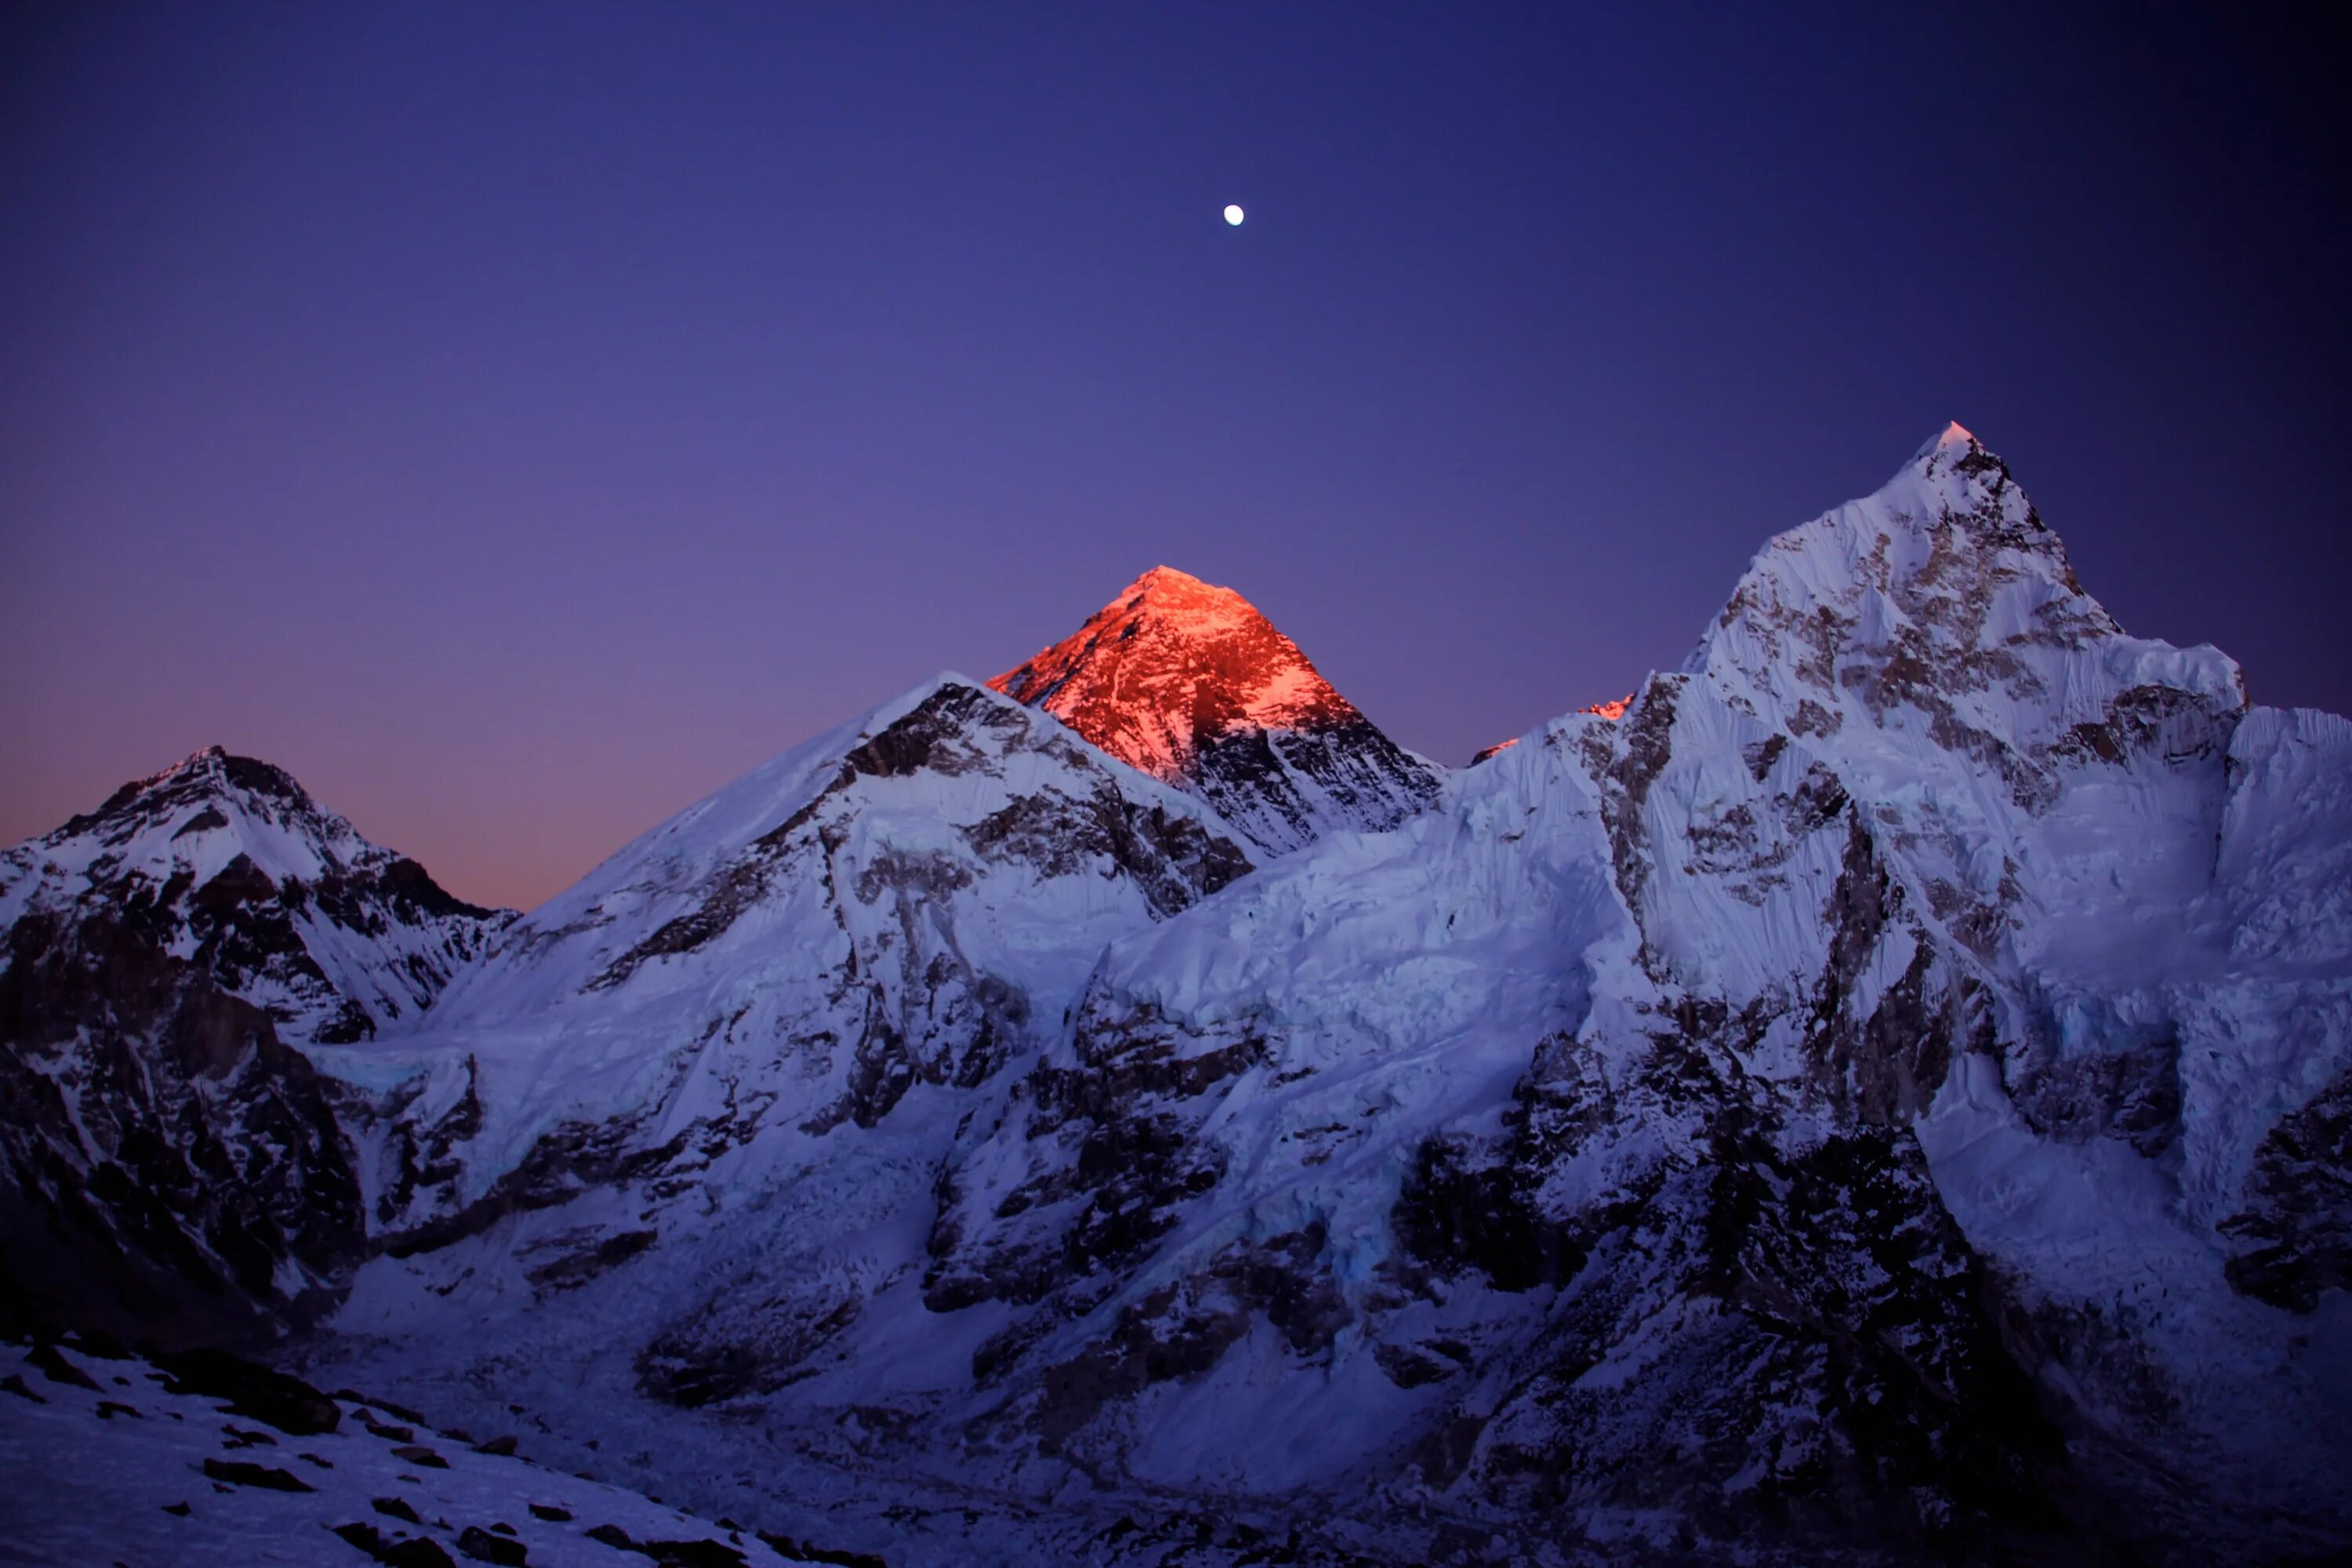 «Сагарматха» = Эверест = Джомолунгма). Лхоцзе гора Гималаи. Эверест Лхоцзе нупцзе. Джомолунгма (Гималаи) - 8848.